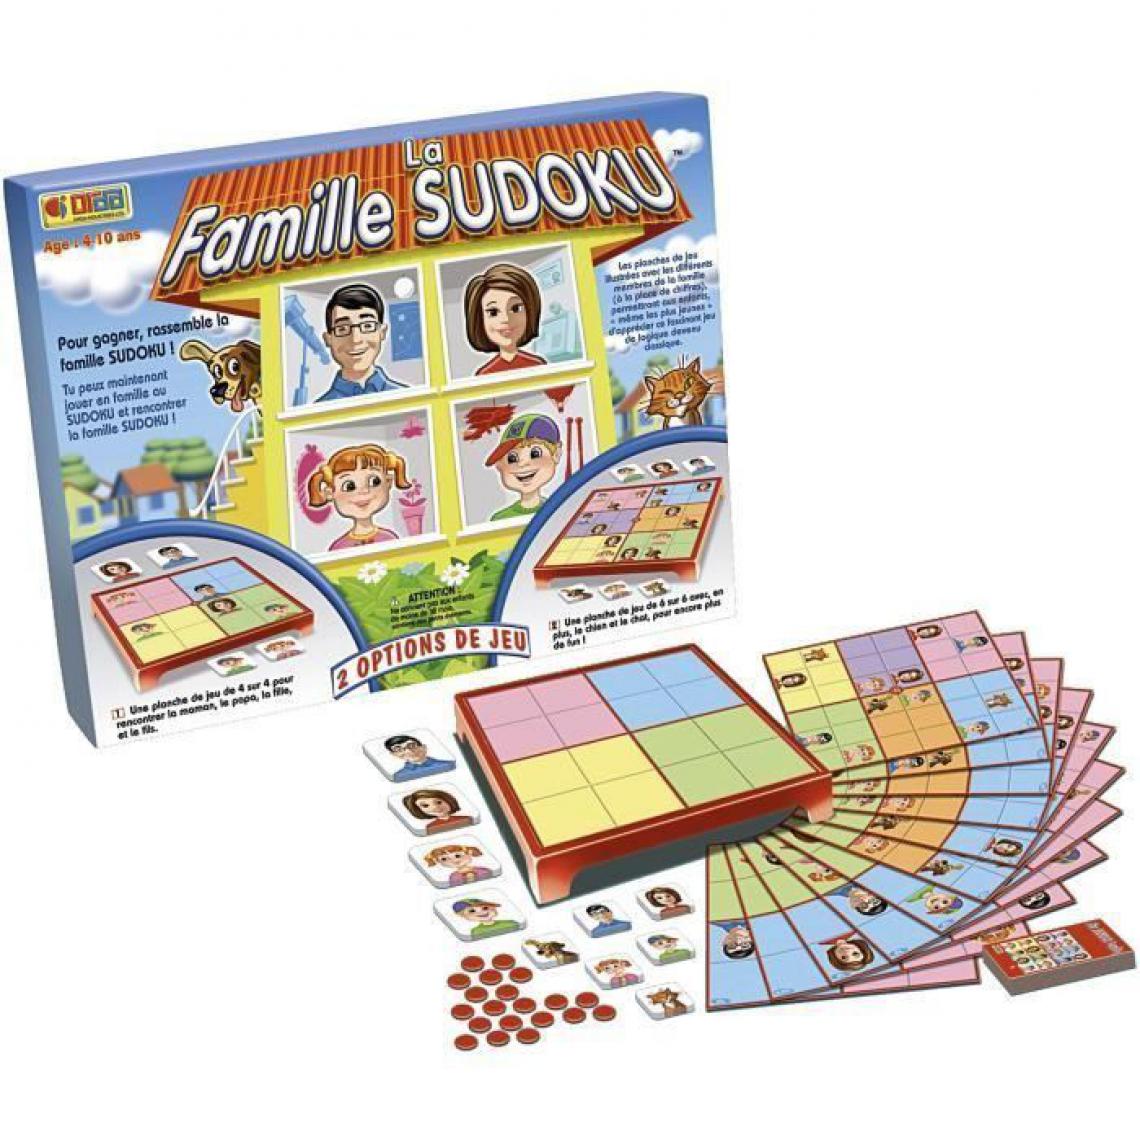 Bsm - BSM - La famille SUDOKU - Jeux éducatifs